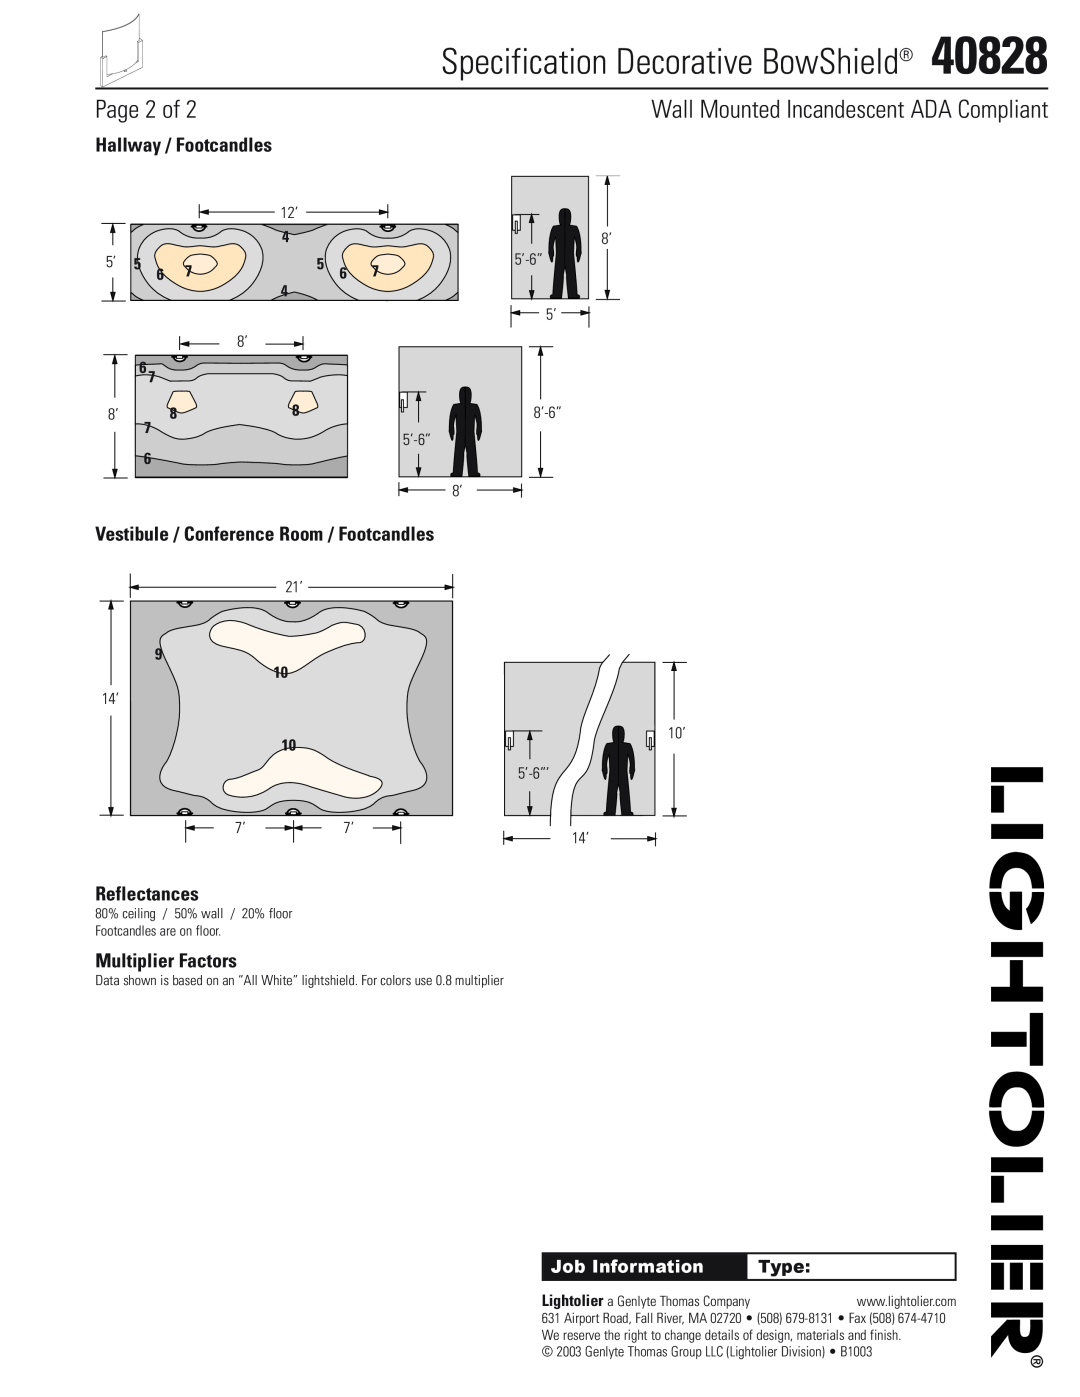 Lightolier 40828 manual Page 2 of, Hallway / Footcandles, Vestibule / Conference Room / Footcandles, Reflectances, Type 